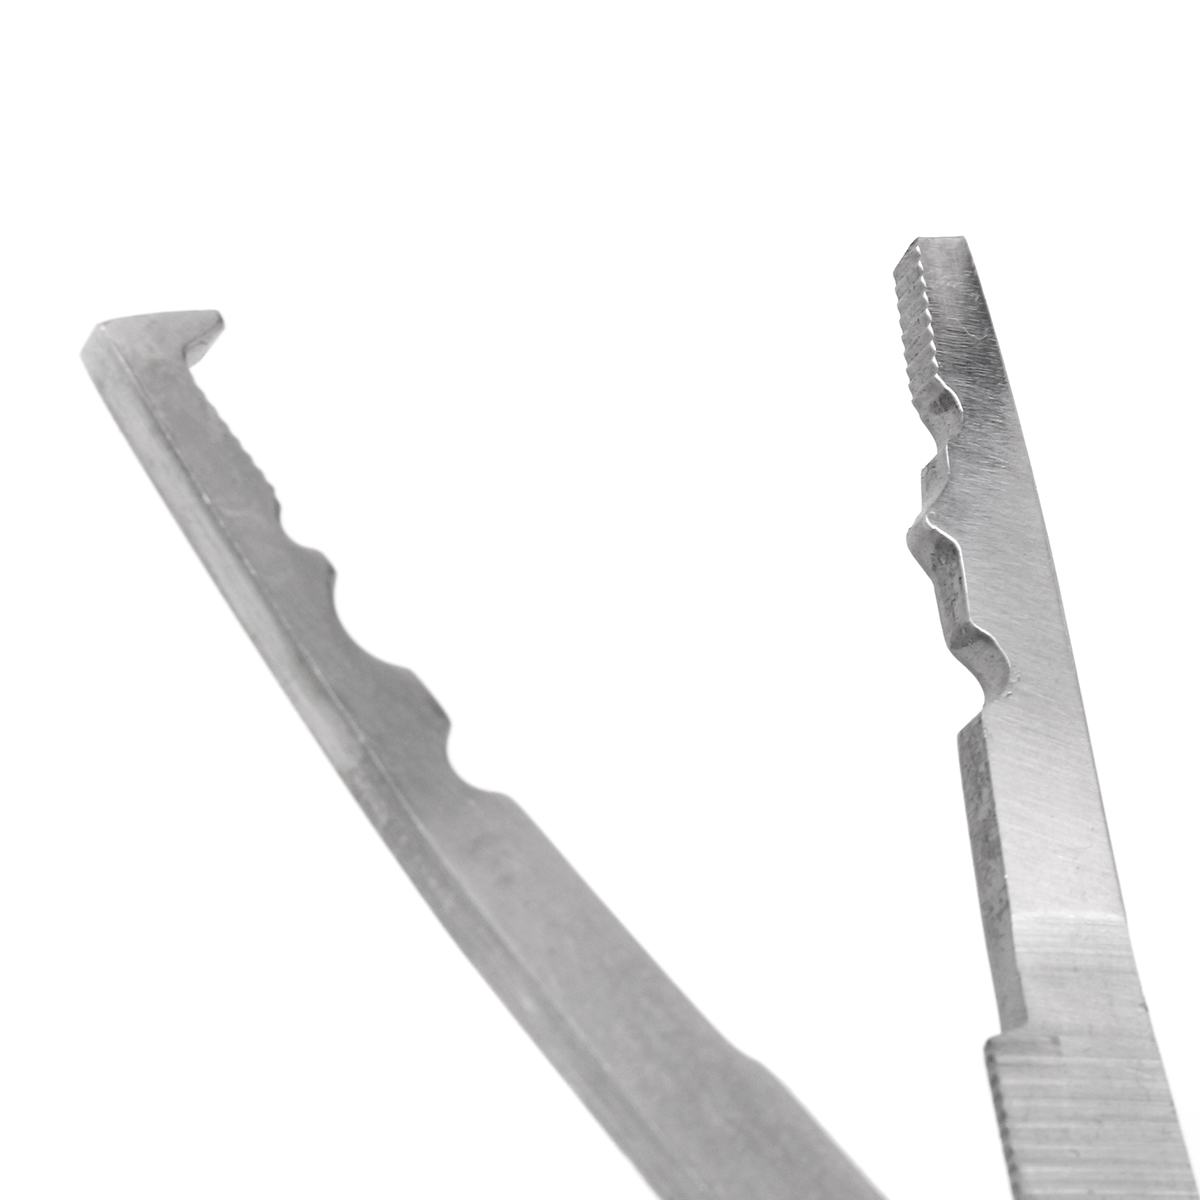 Stainless-Steel-Fishing-Pliers-Plierweiter-Scissors-Line-Cutter-Hook-Tackle-Tool-1151463-9